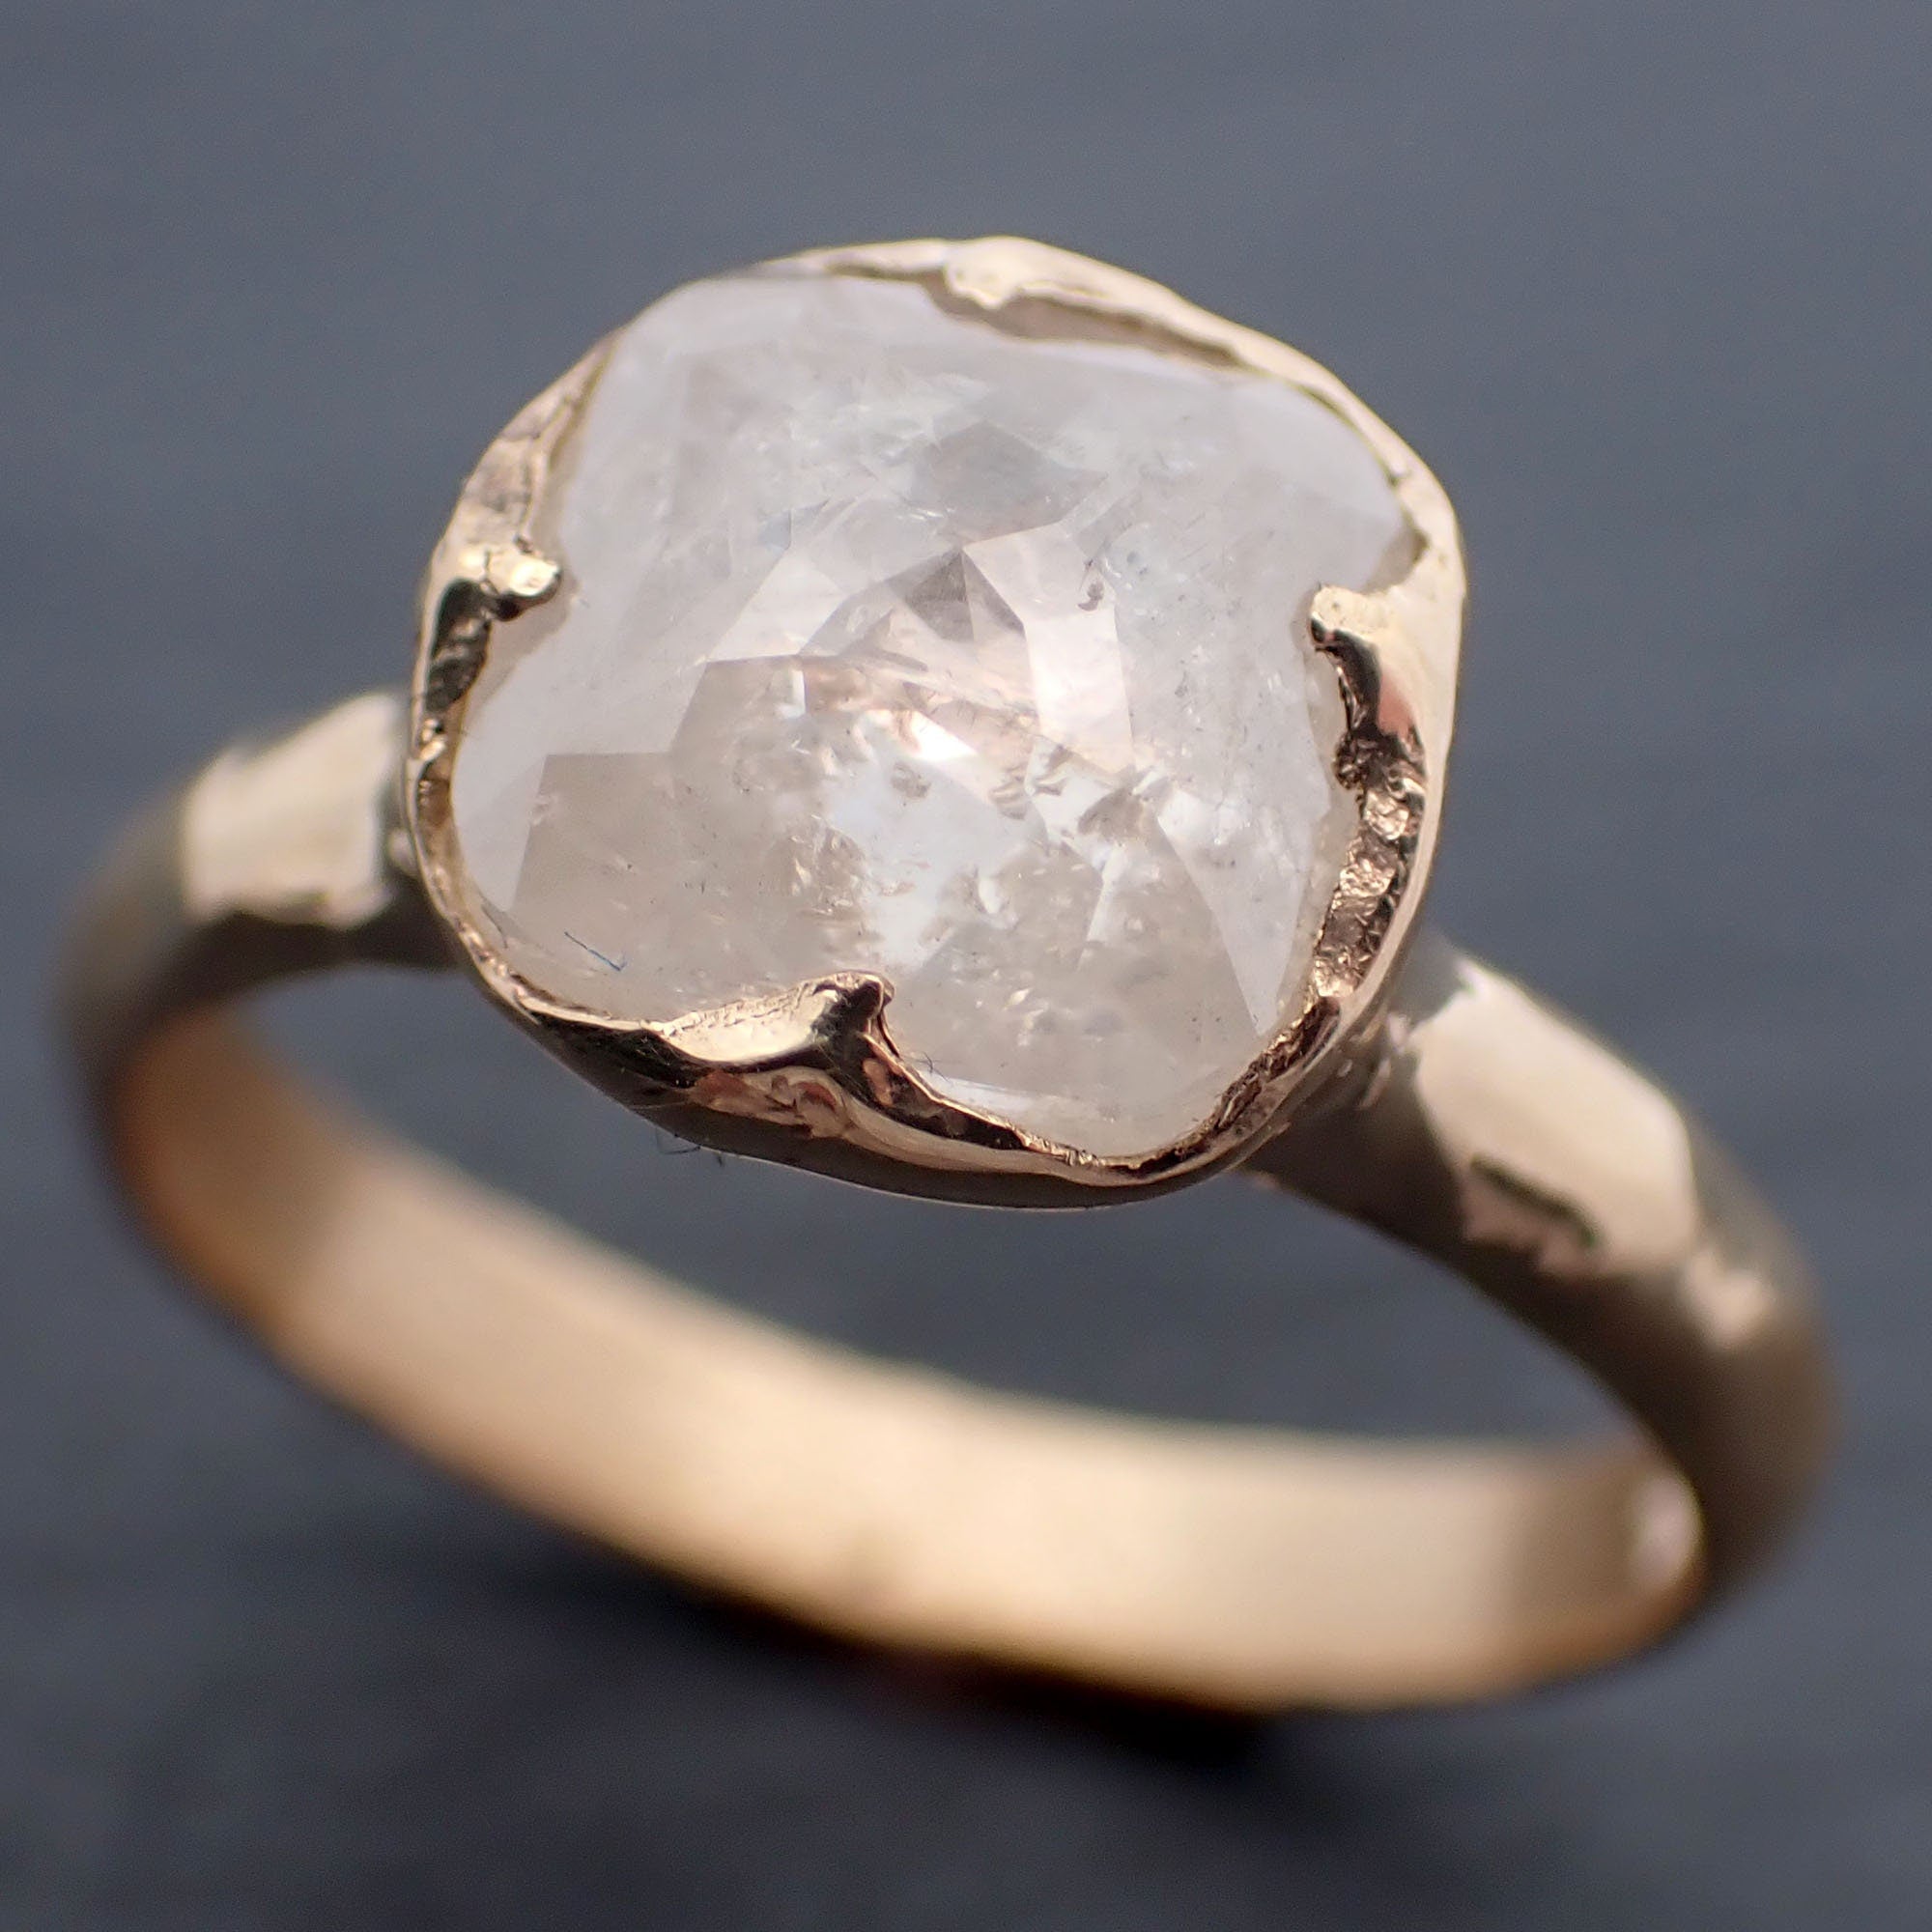 Fancy cut white Diamond Solitaire Engagement 18k yellow Gold Wedding Ring byAngeline 3281